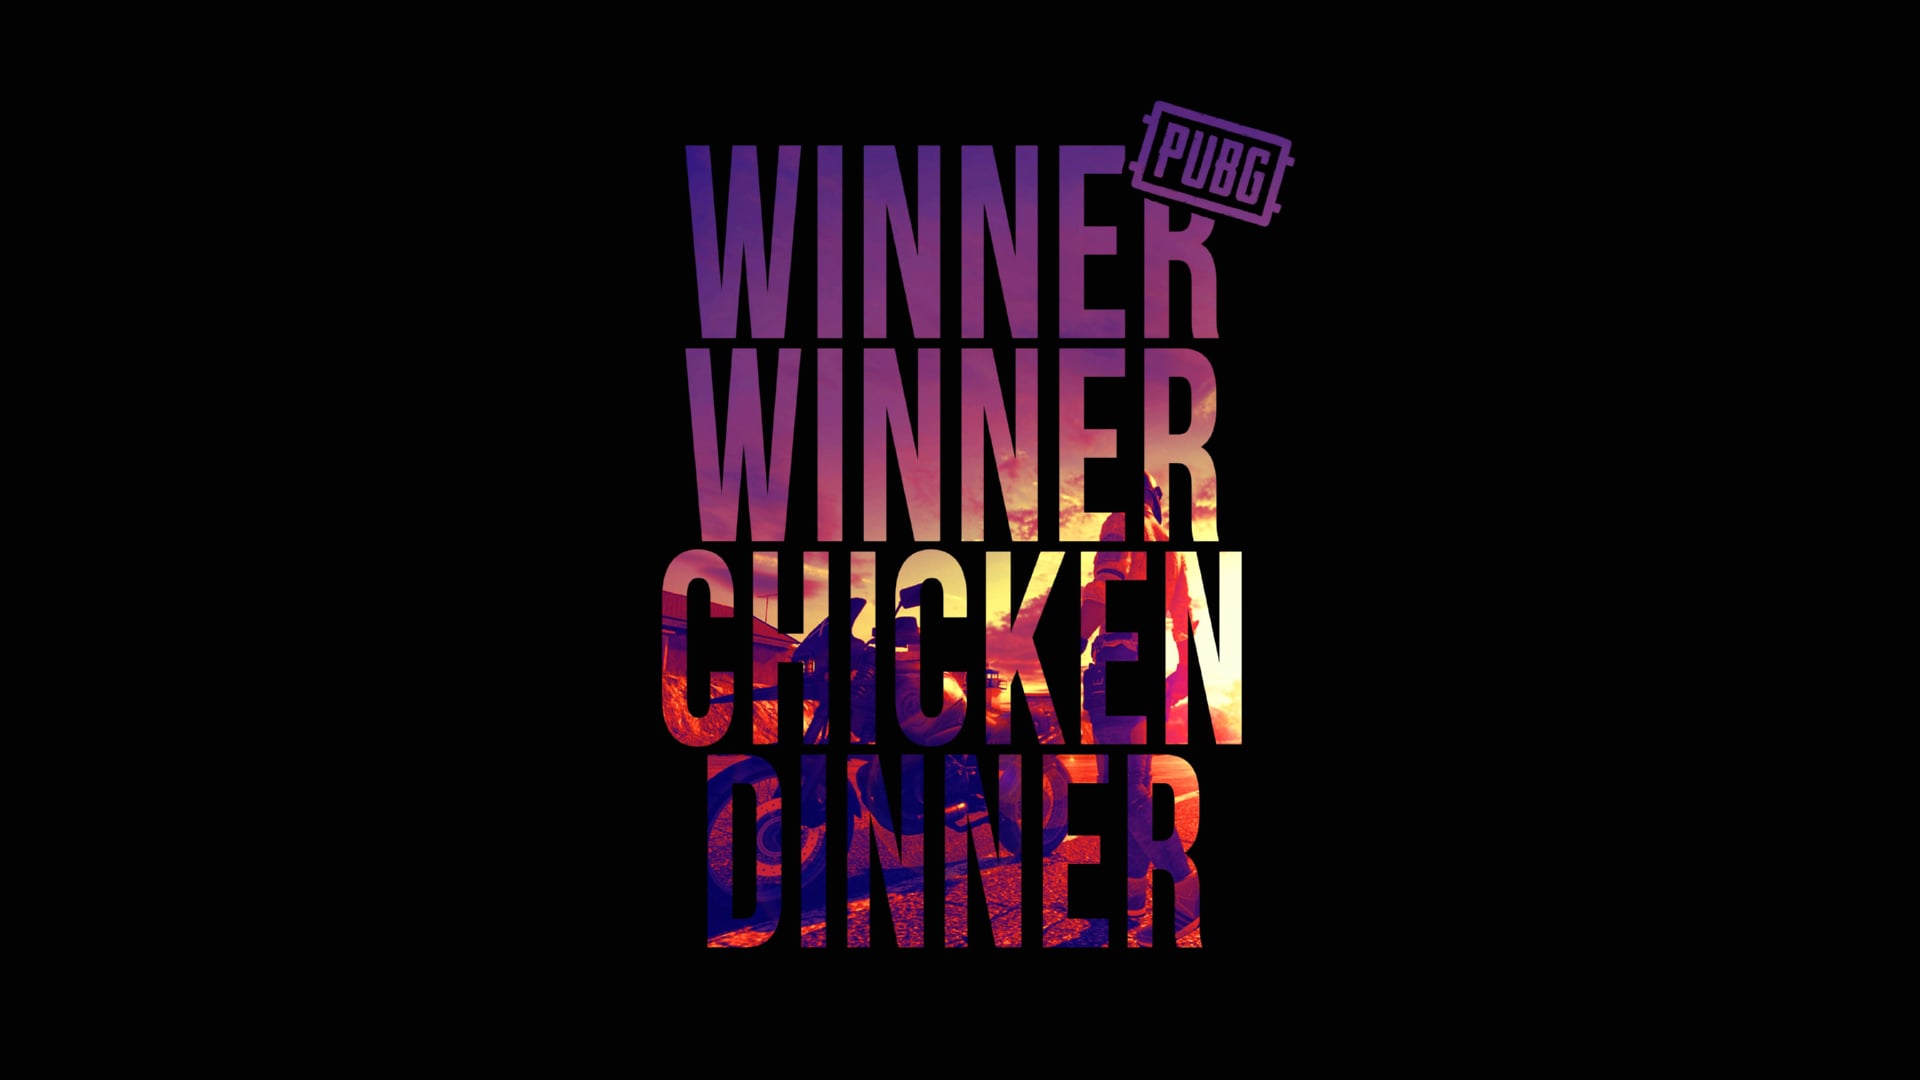 Winner Winner Chicken Dinner at 1152 x 864 size wallpapers HD quality